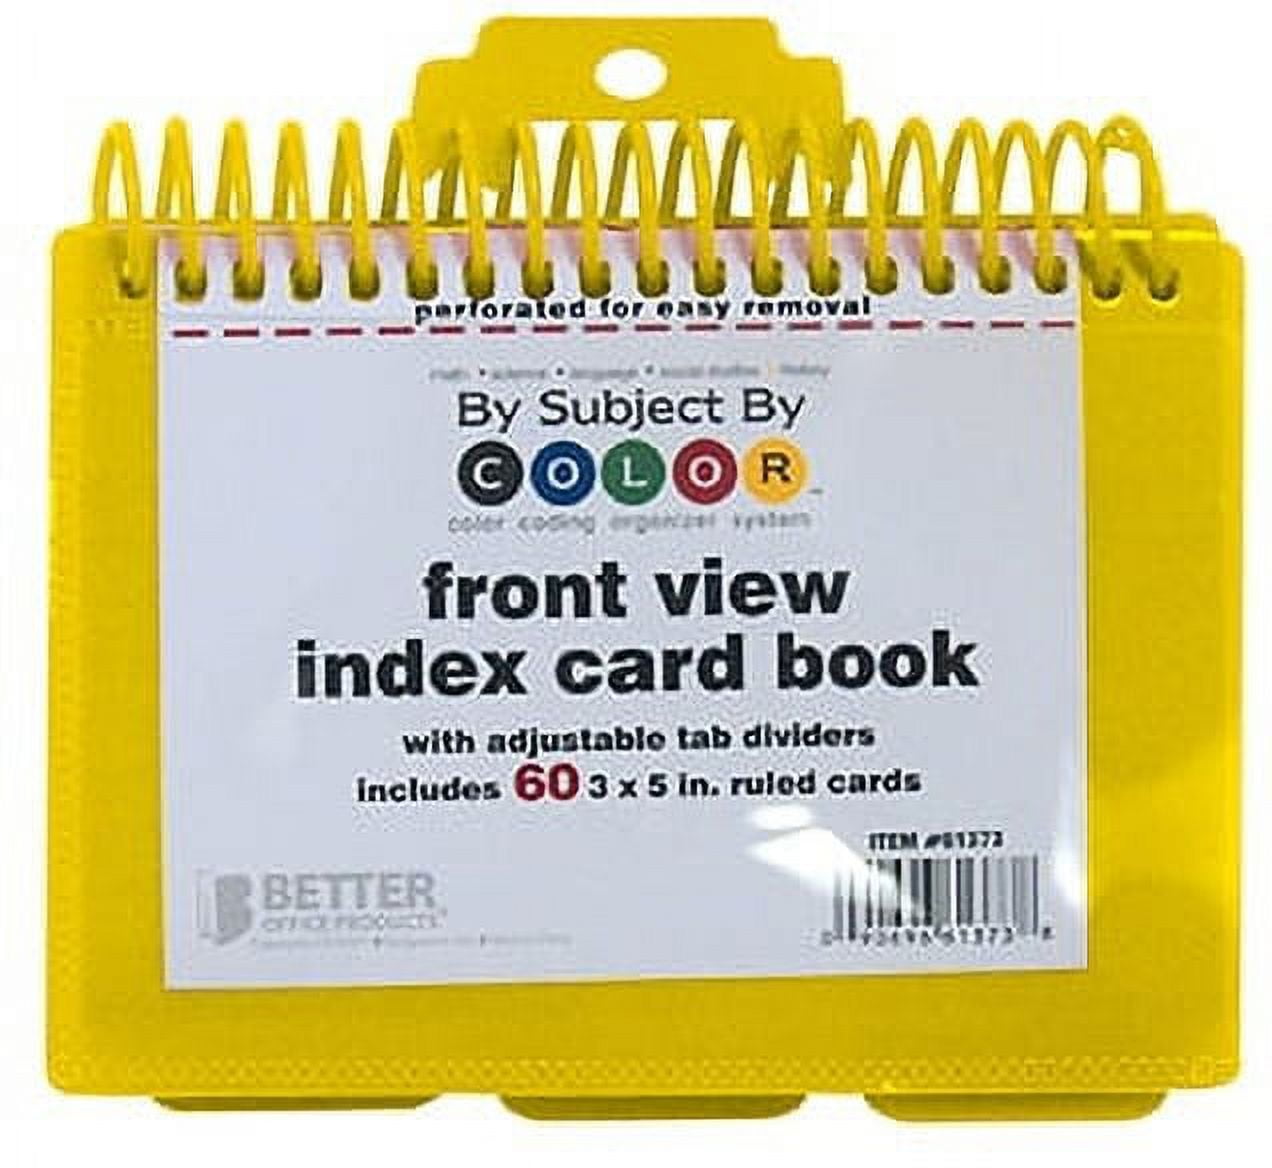 Buy Index Cards Online - Ubuy India - Best Prices